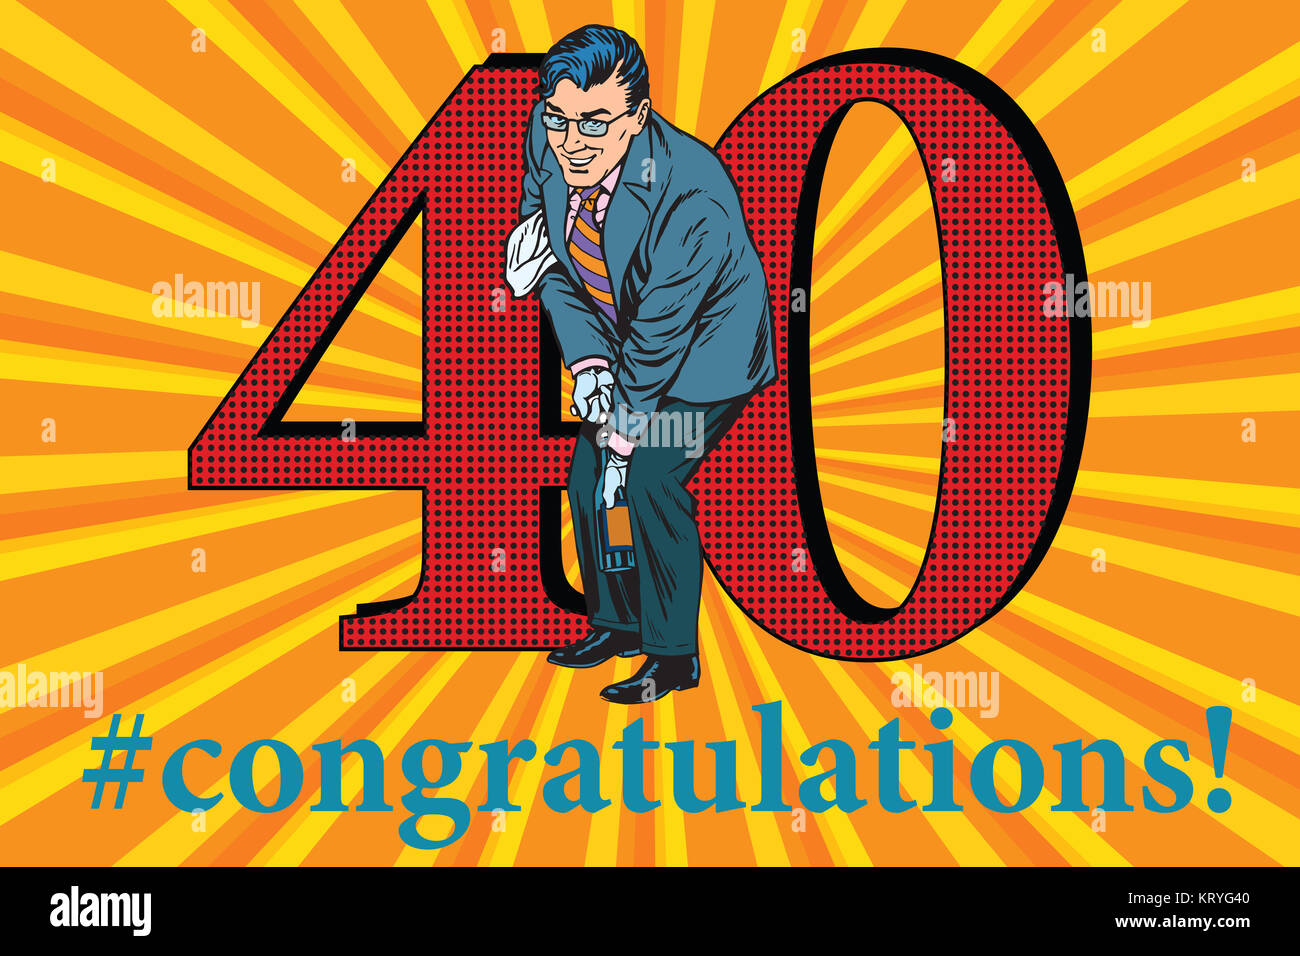 Congratulations 40 anniversary event celebration Stock Photo